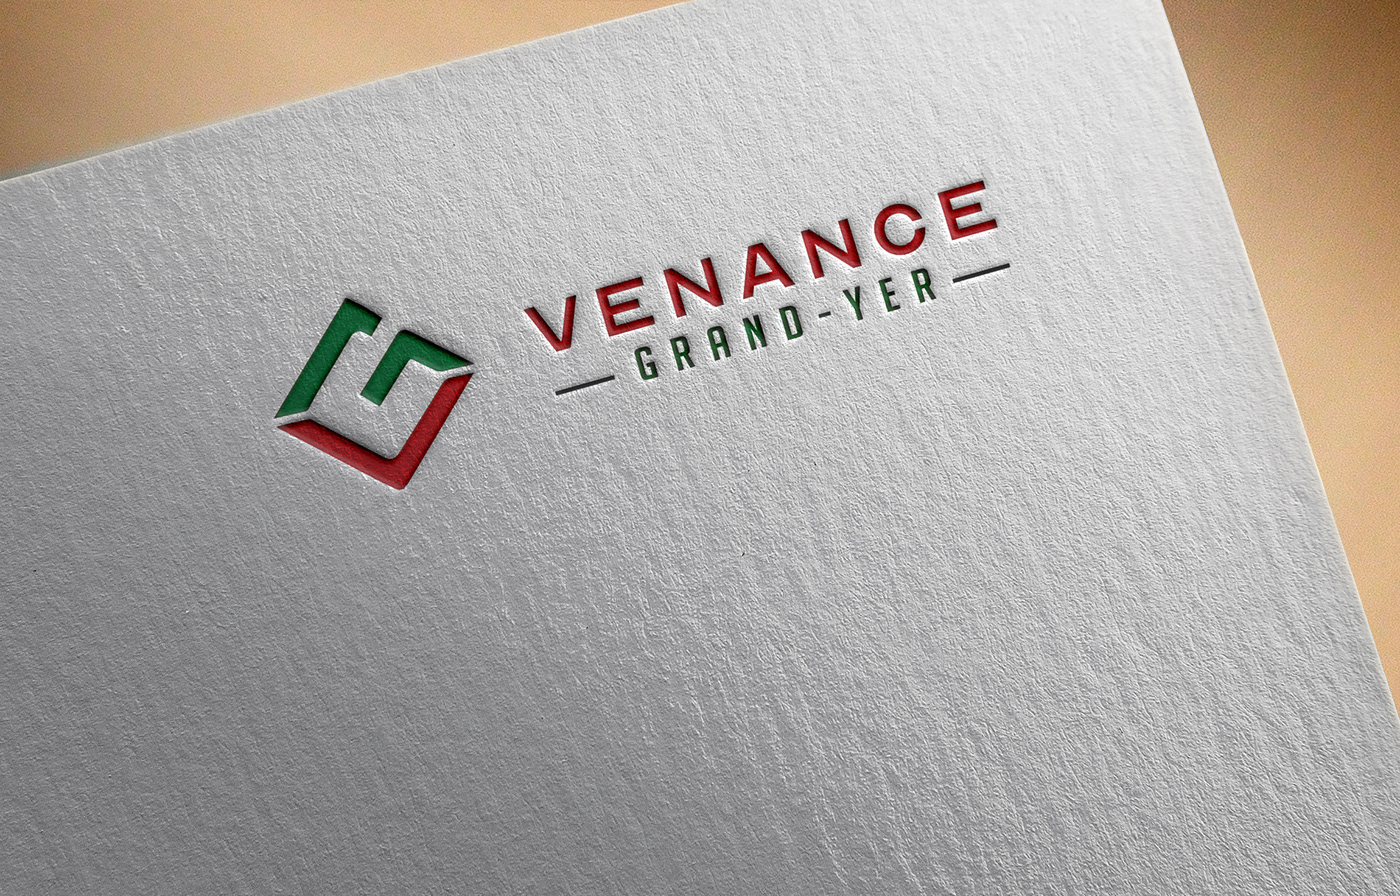 vg logo typography logo text logo company logo letter based logo consulting logo Business Logo creative logo clean logo unique logo